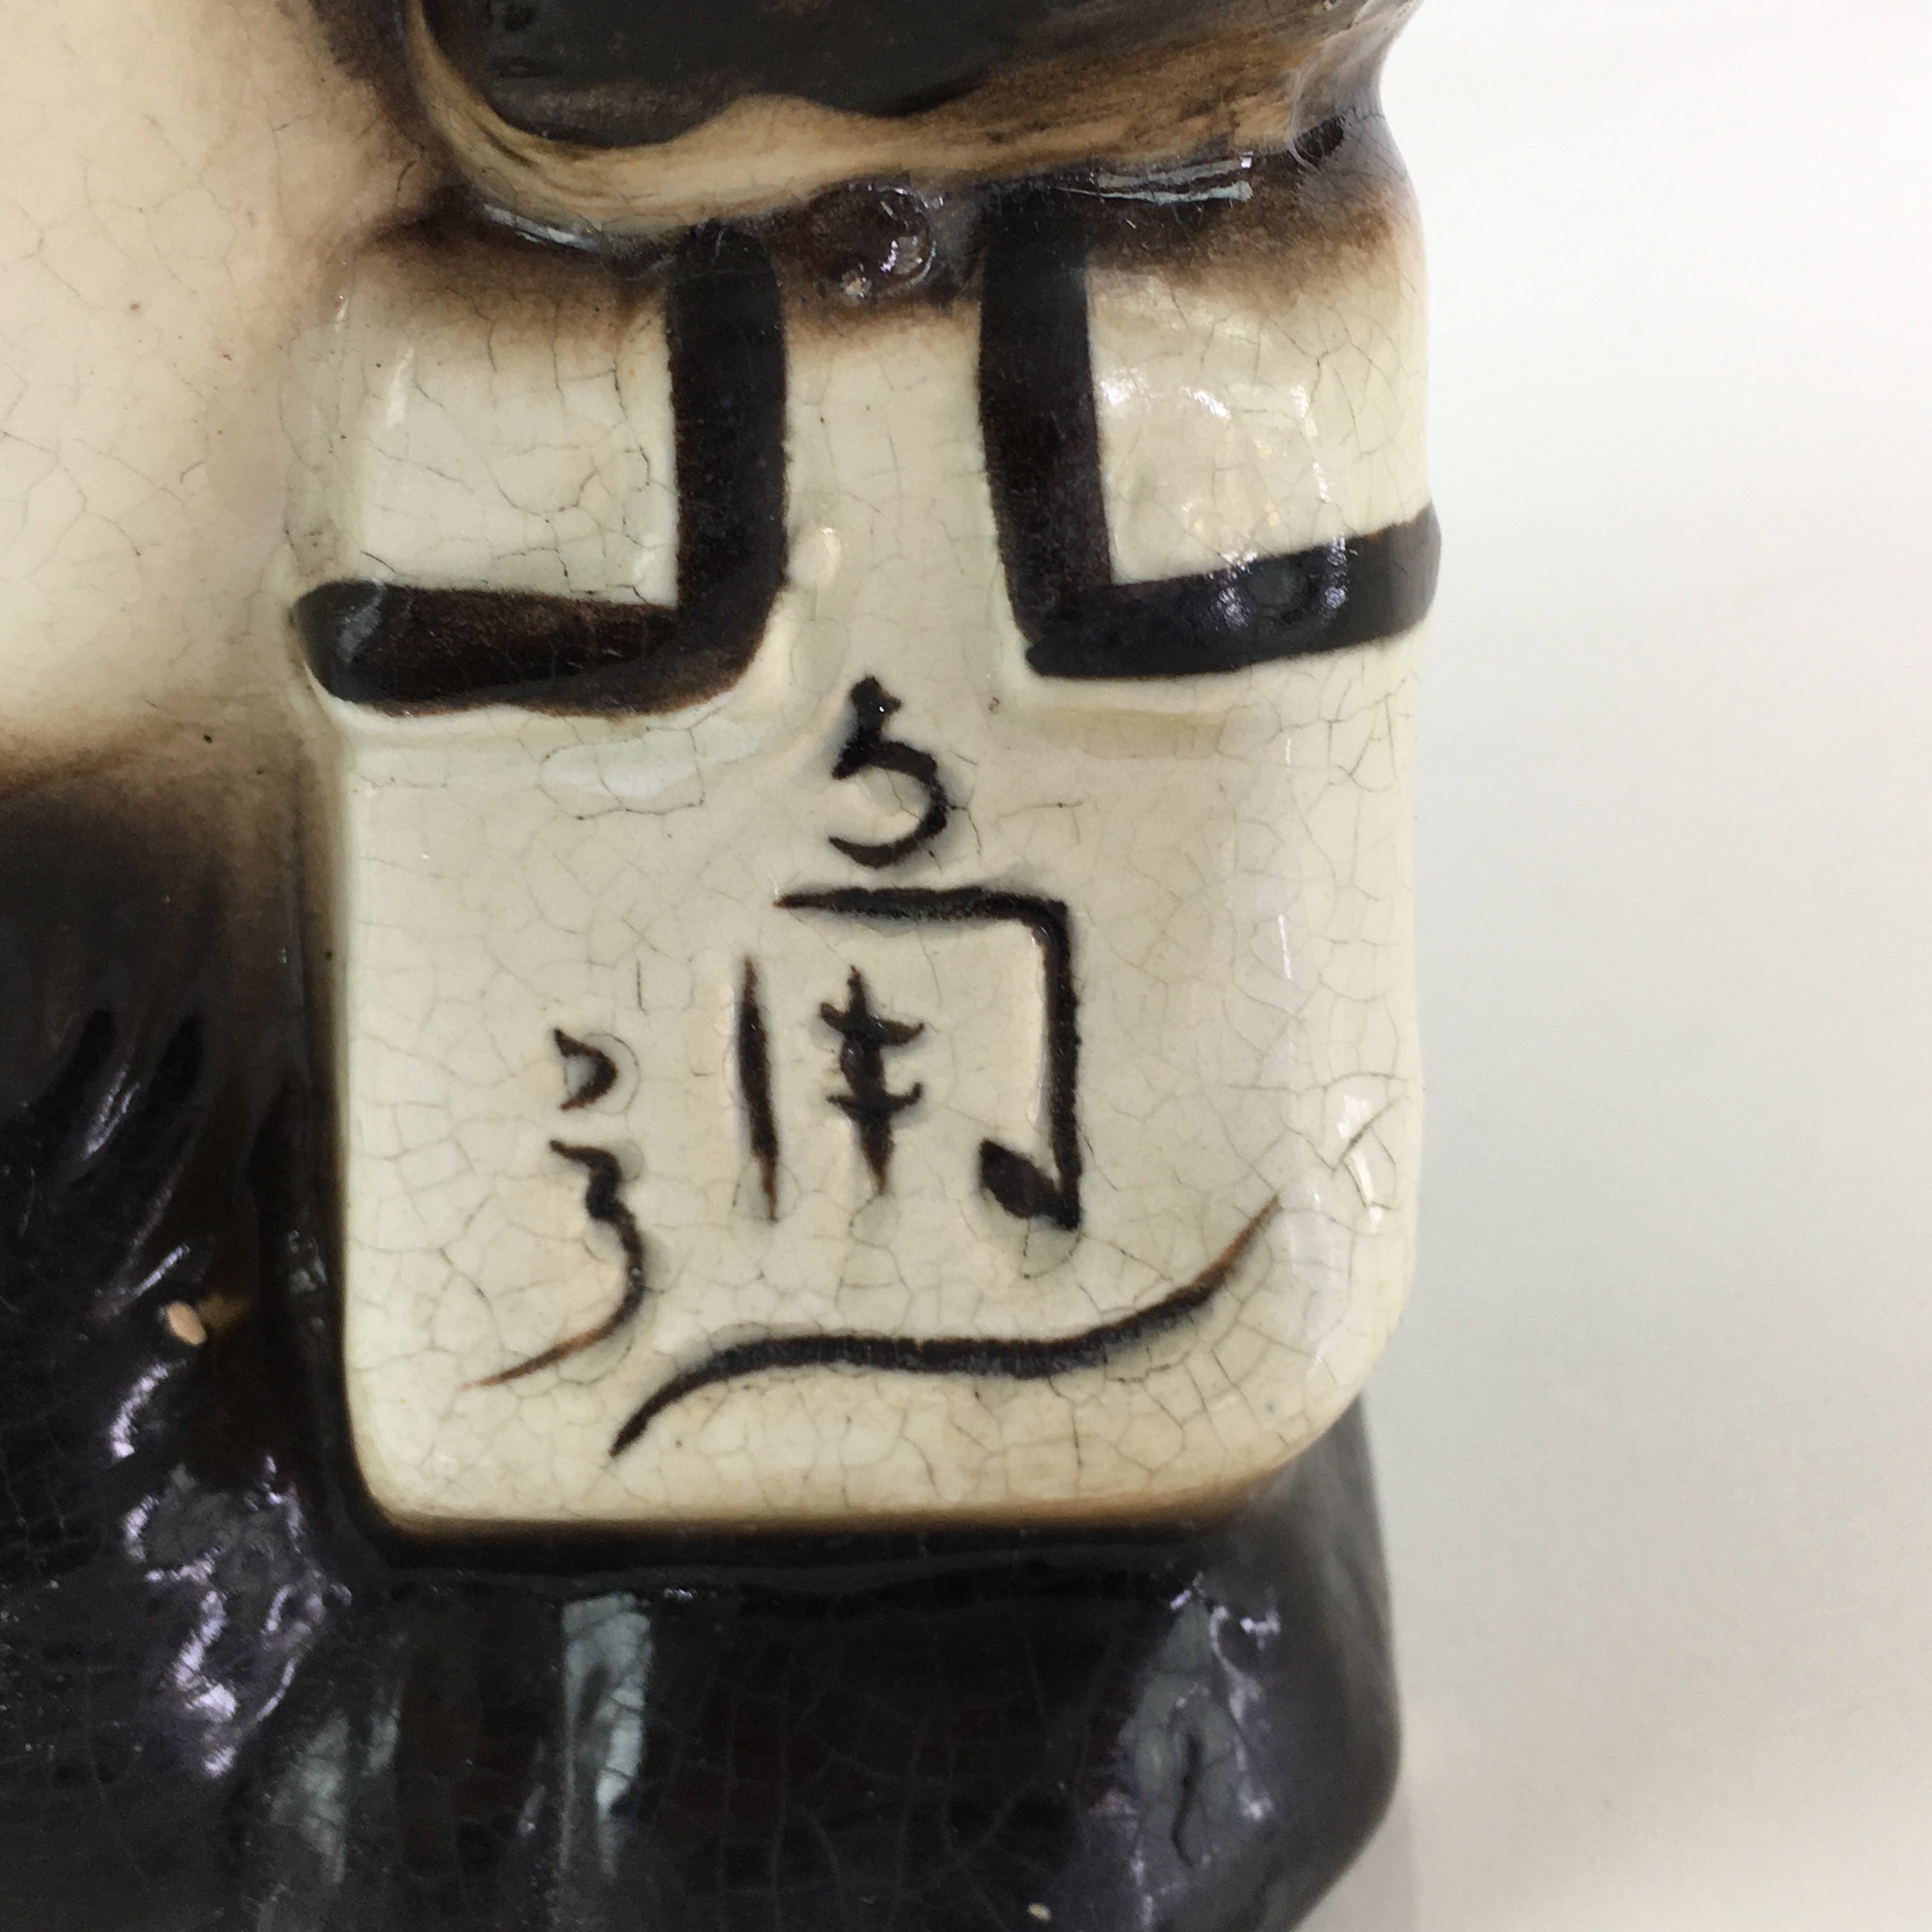 Japanese Tanuki Ceramic Raccoon Dog Statue Shigaraki ware Vtg Pottery BD839